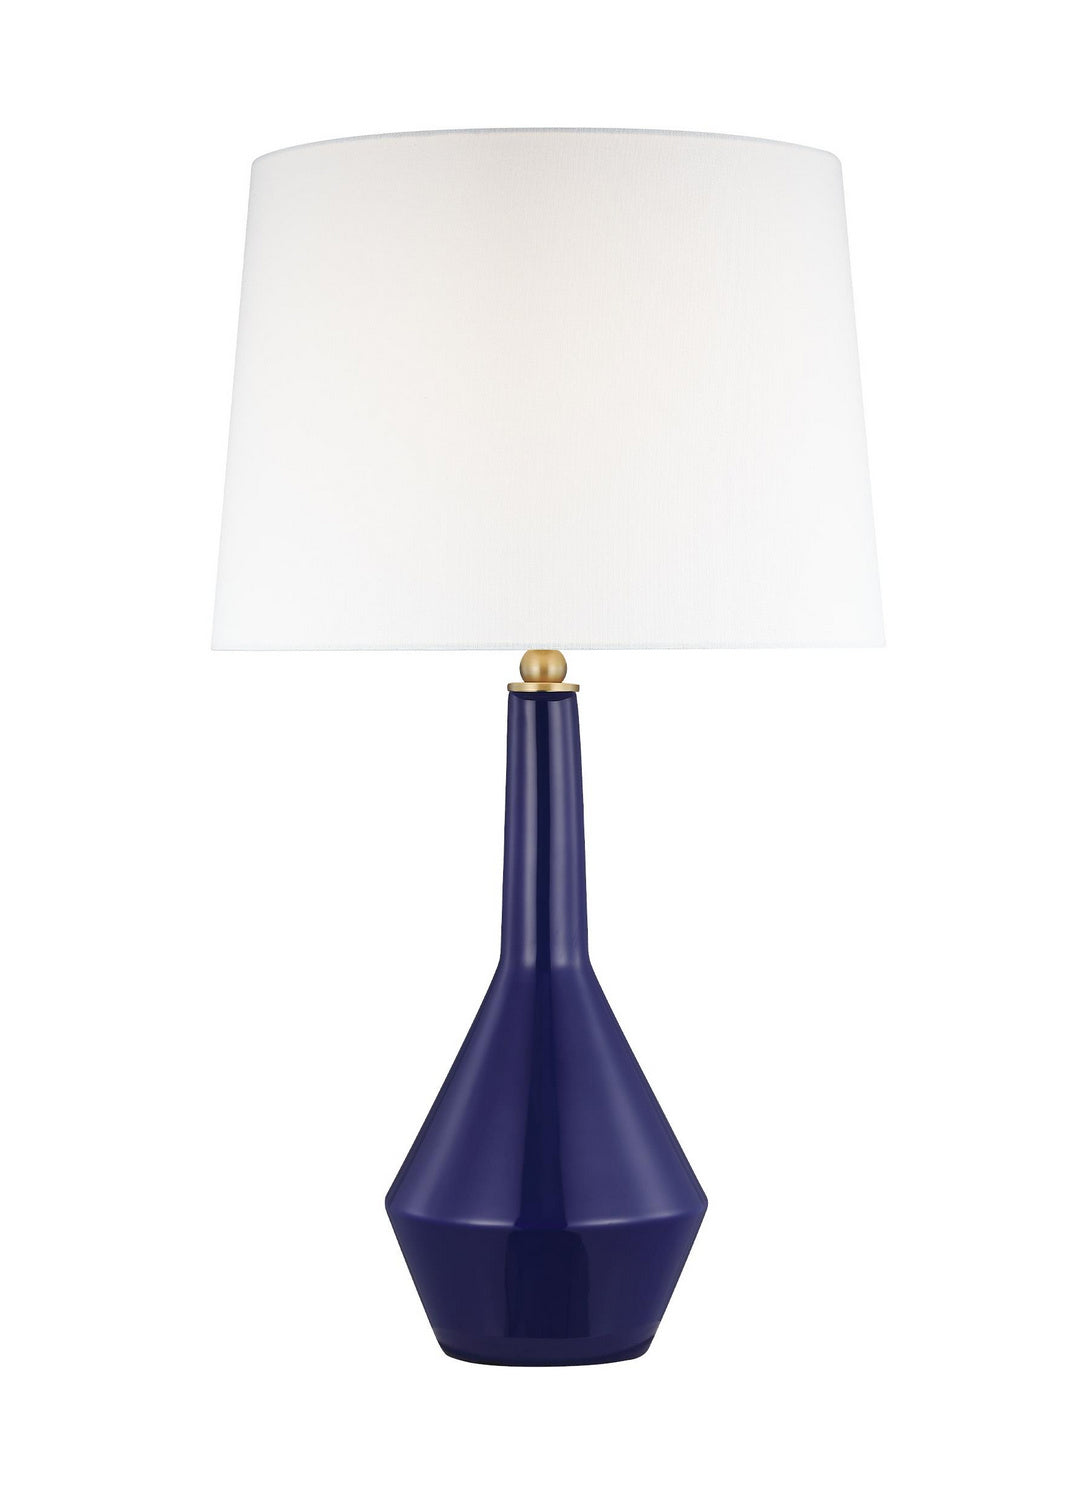 Visual Comfort Studio - TT1251BCL1 - One Light Table Lamp - Alana - Blue Celadon